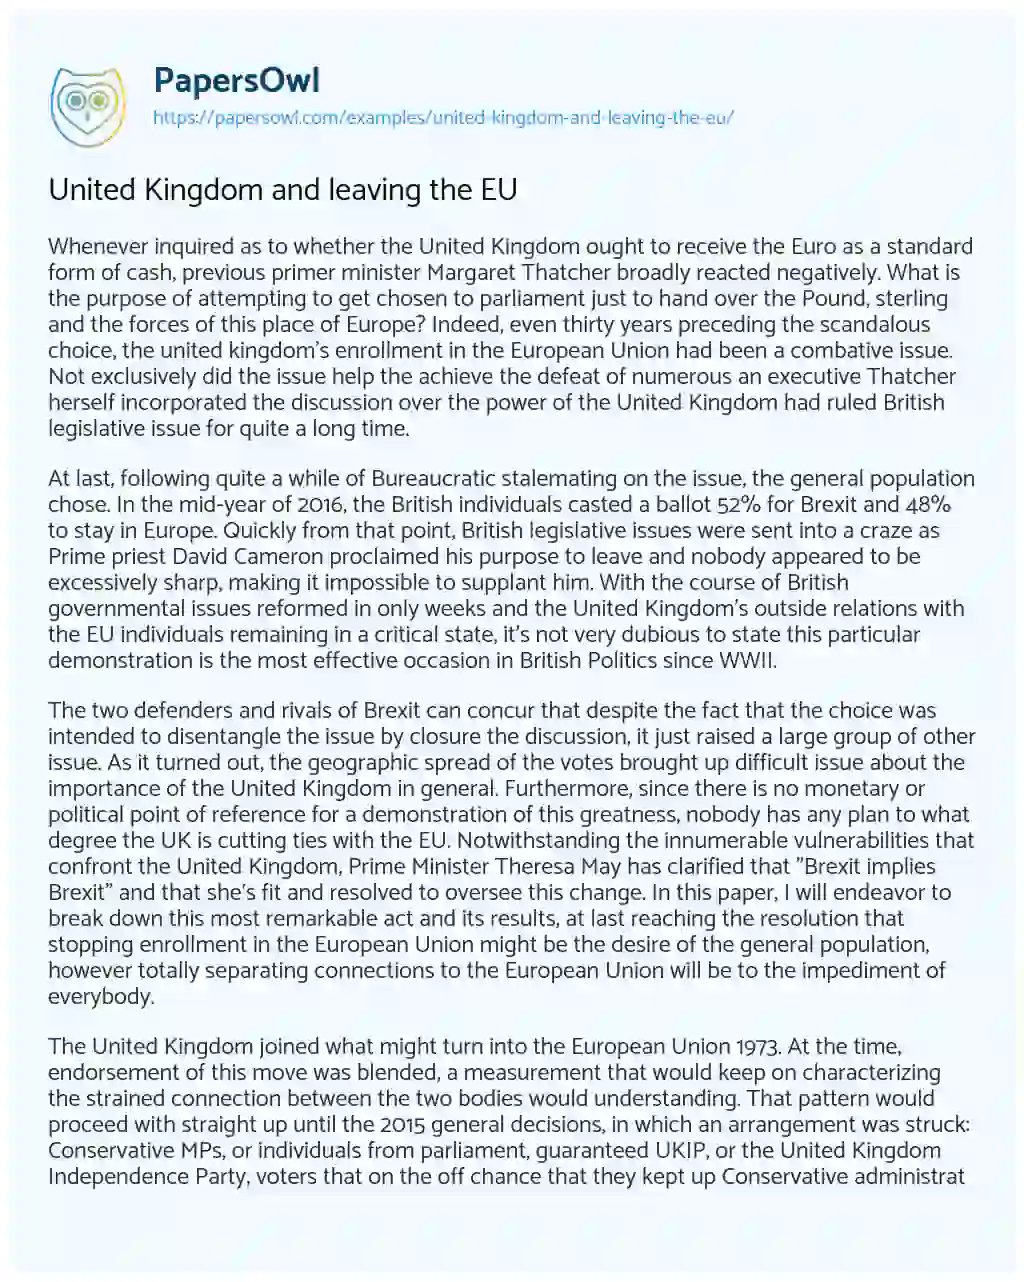 Essay on United Kingdom and Leaving the EU